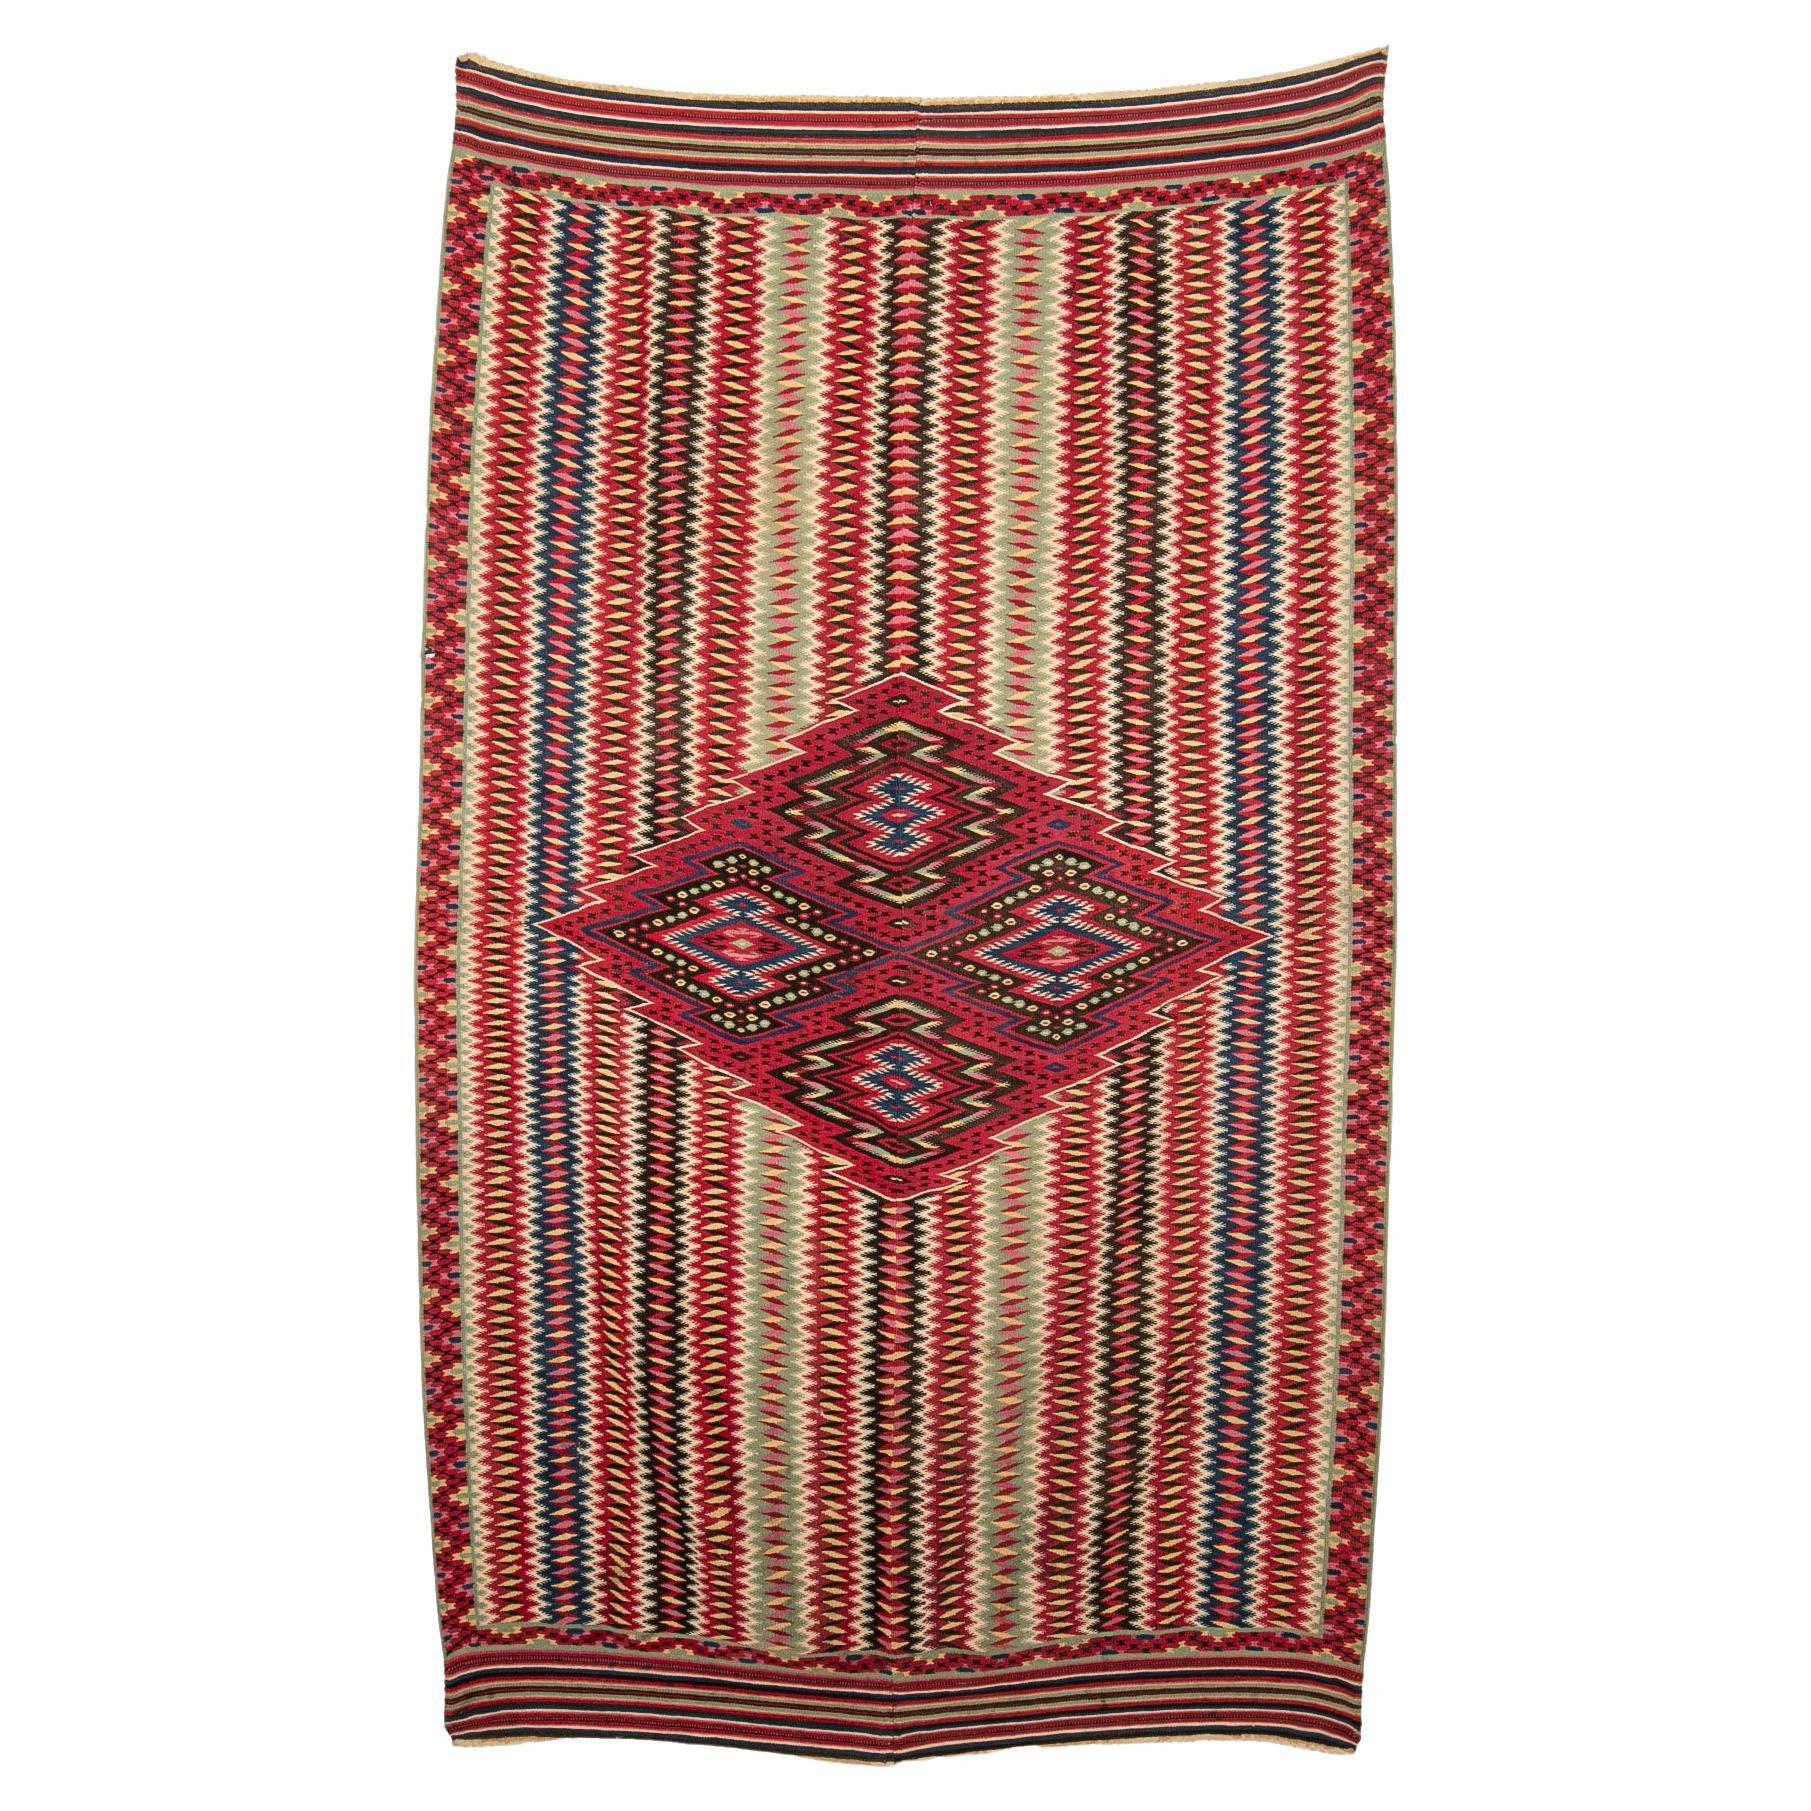 Saltillo Serape Mexican Blanket, 19th Century